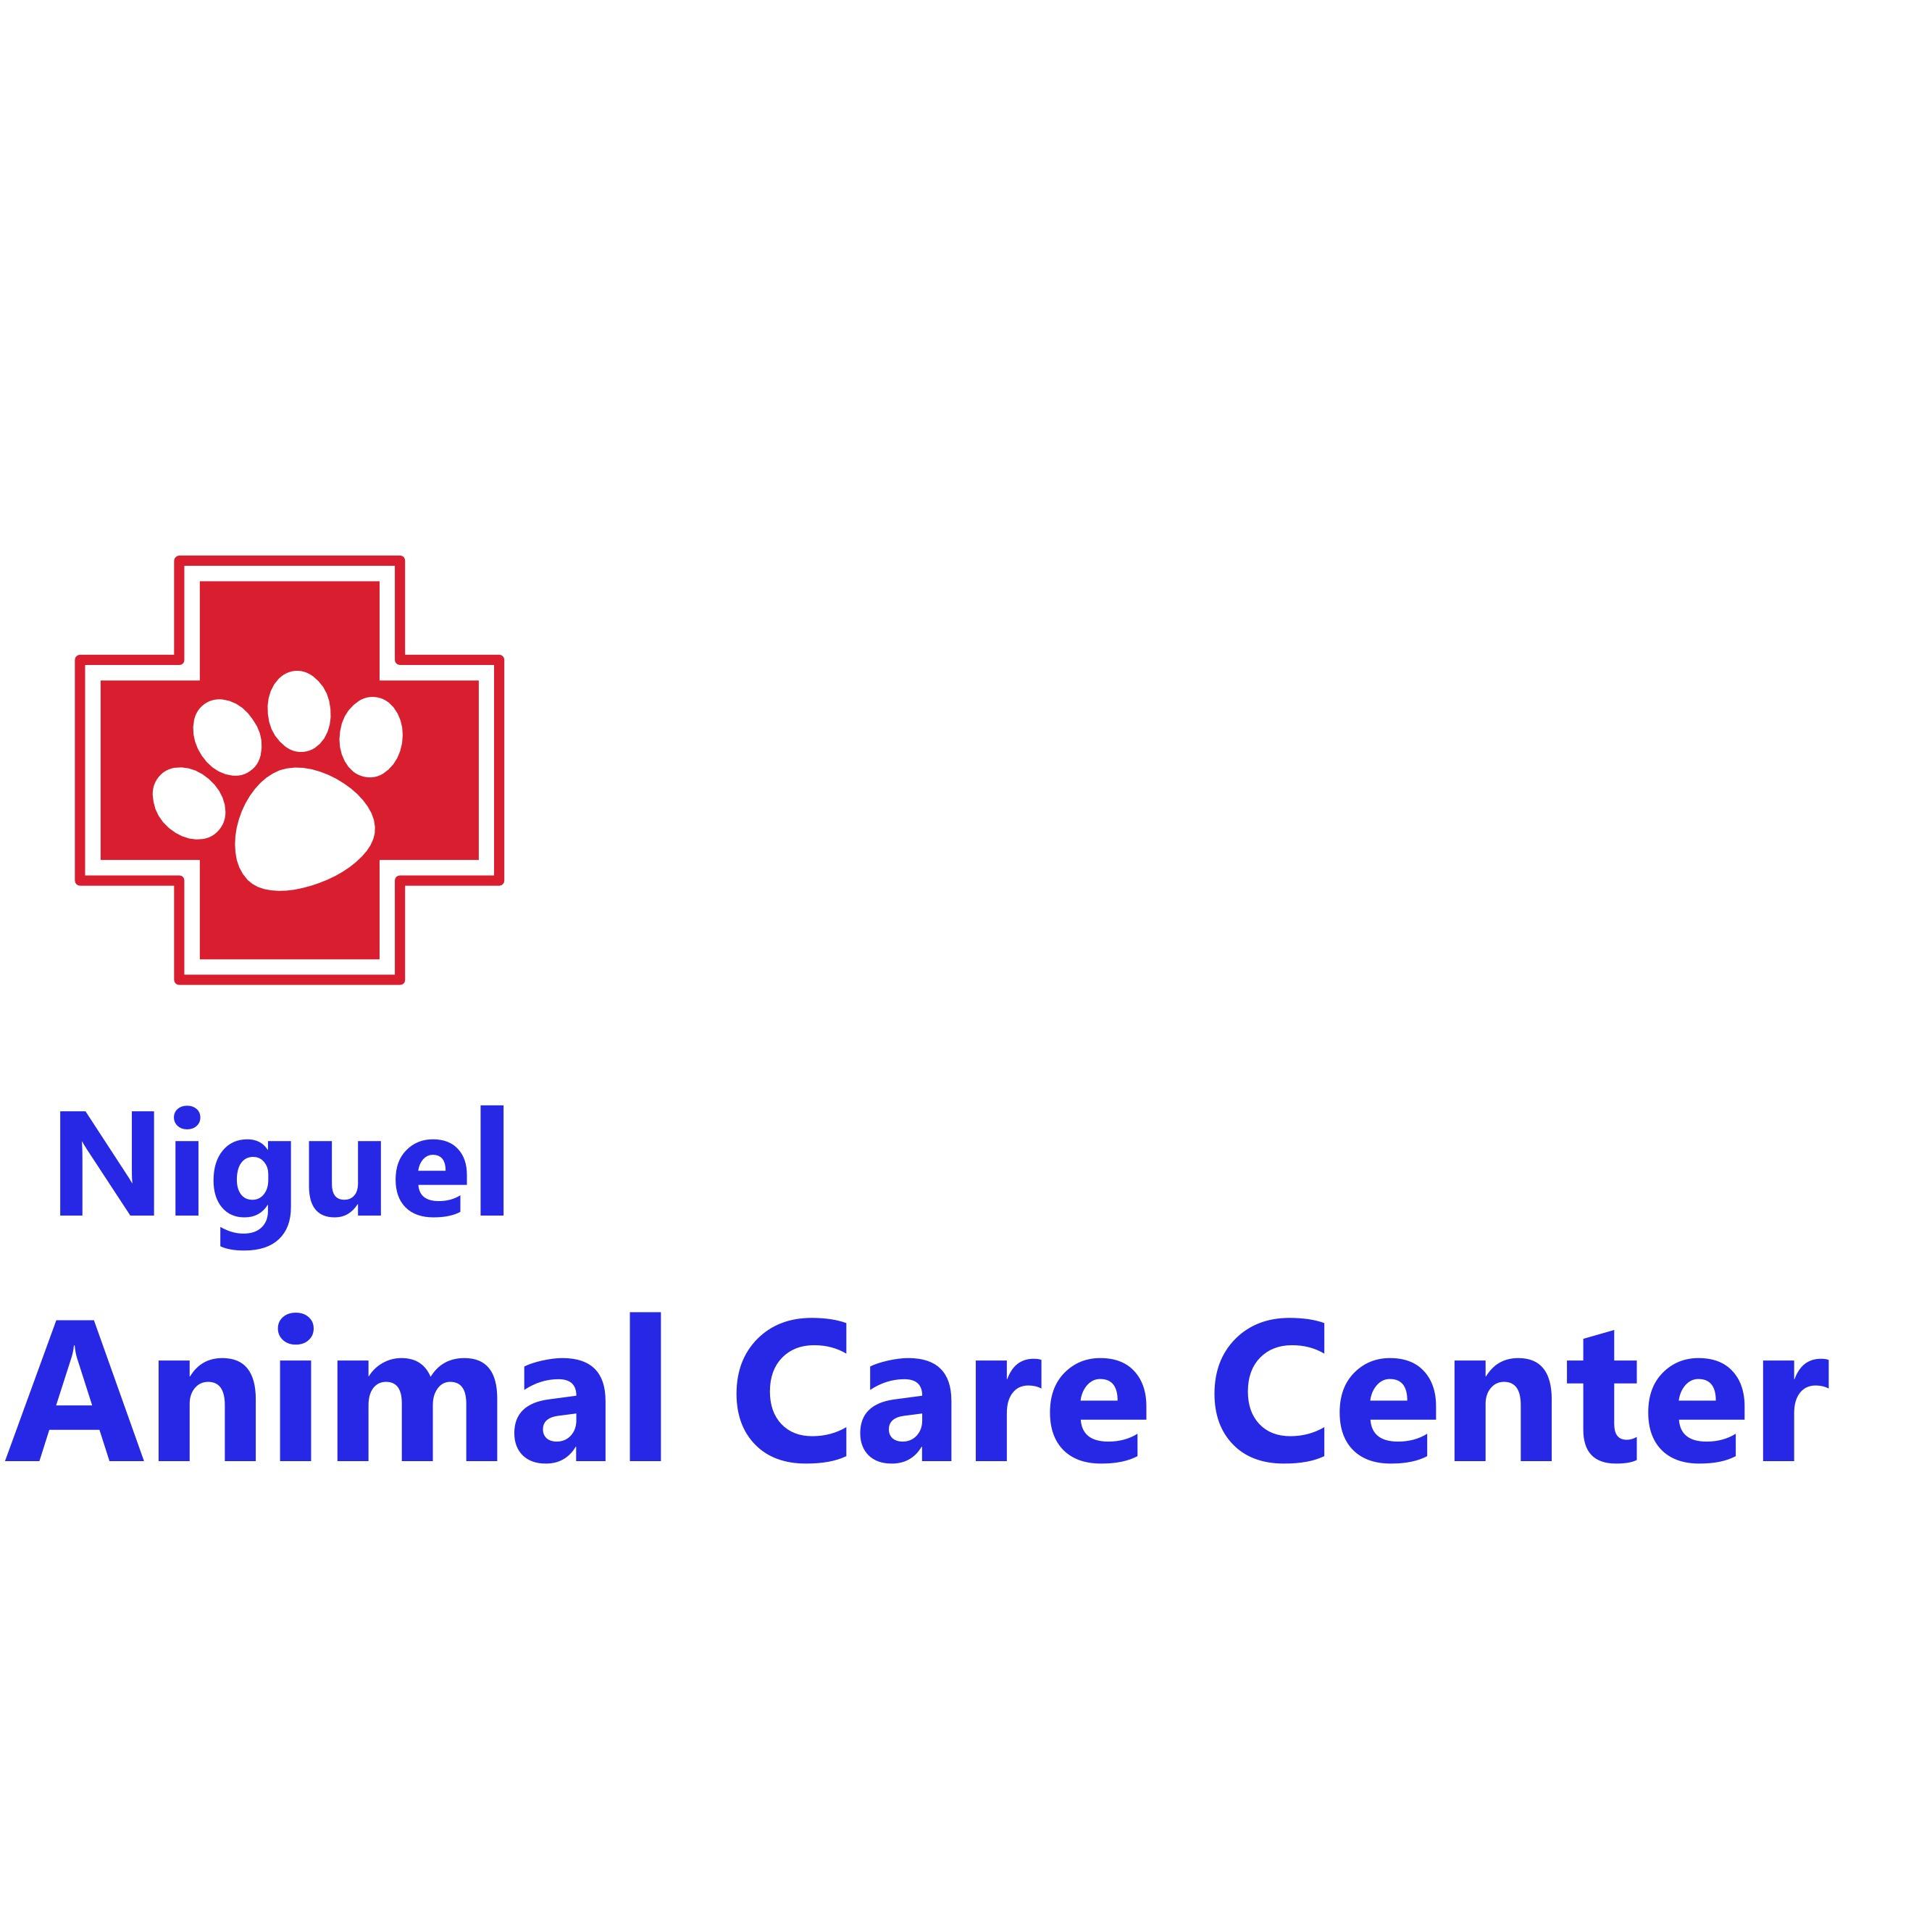 Niguel Animal Care Center Logo